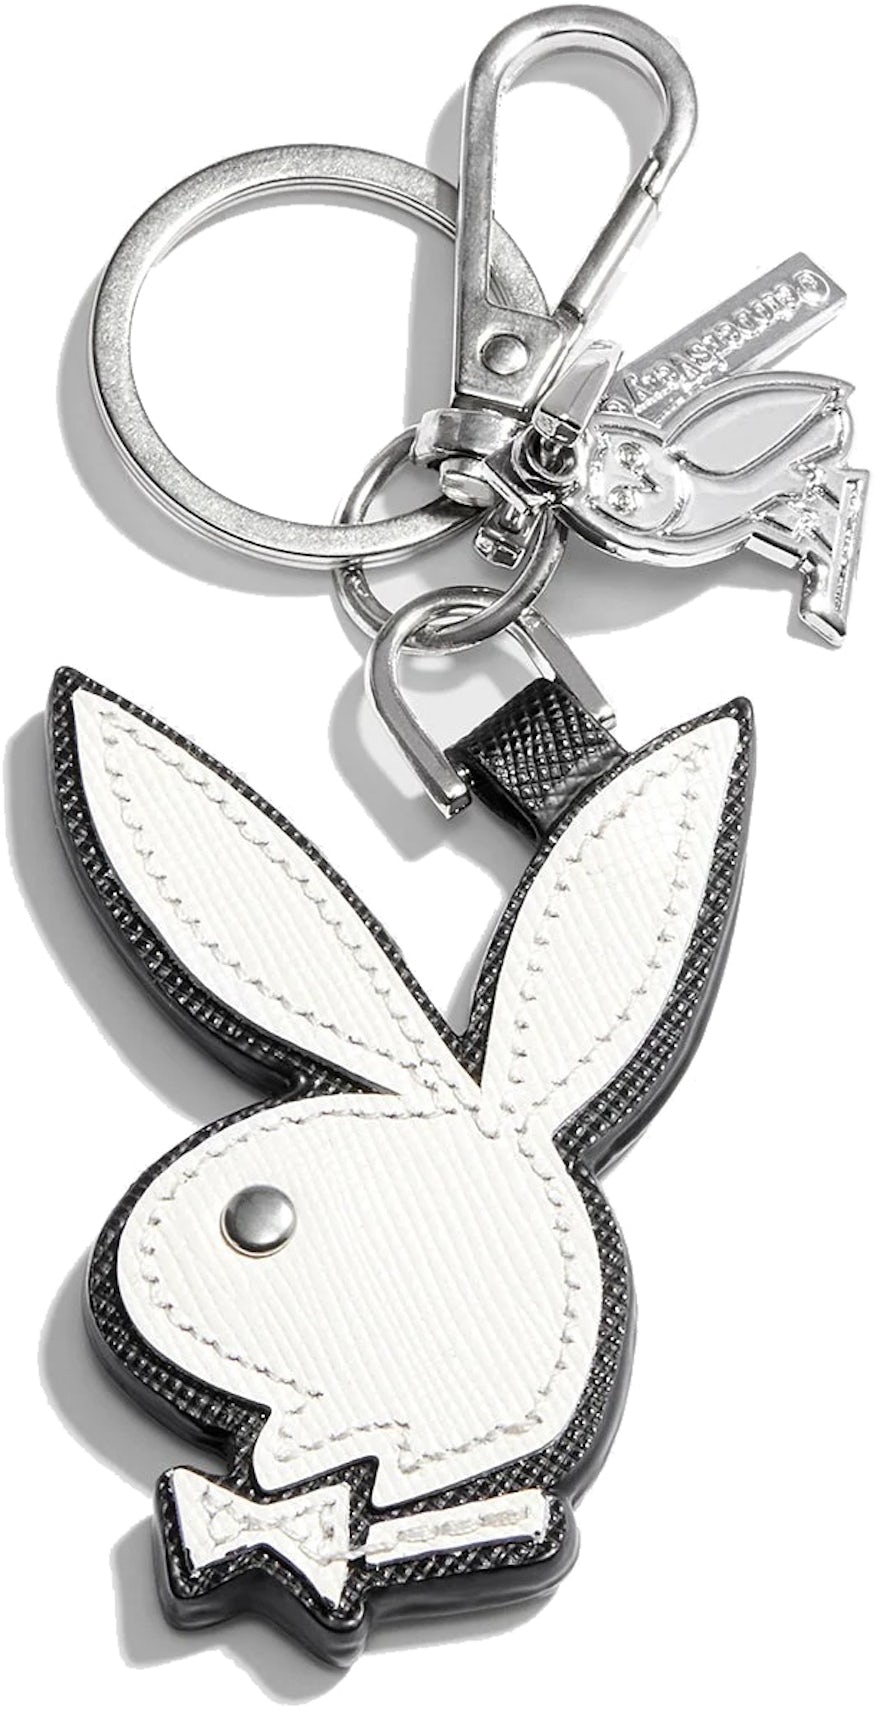 Playboy Monogram Mini Bag - $127 - From Playboy